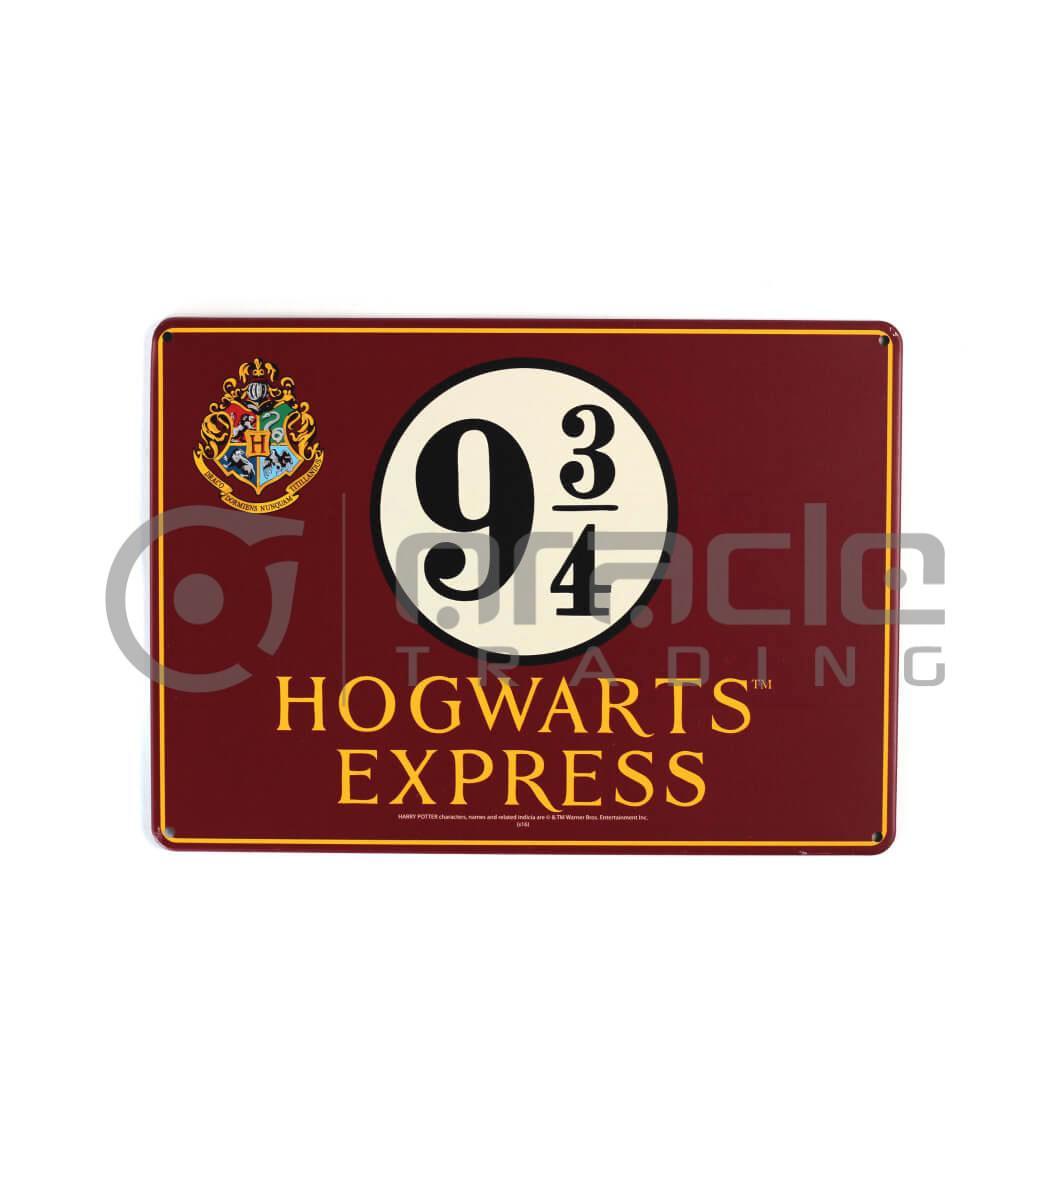 Harry Potter Street Sign - Hogwarts Express